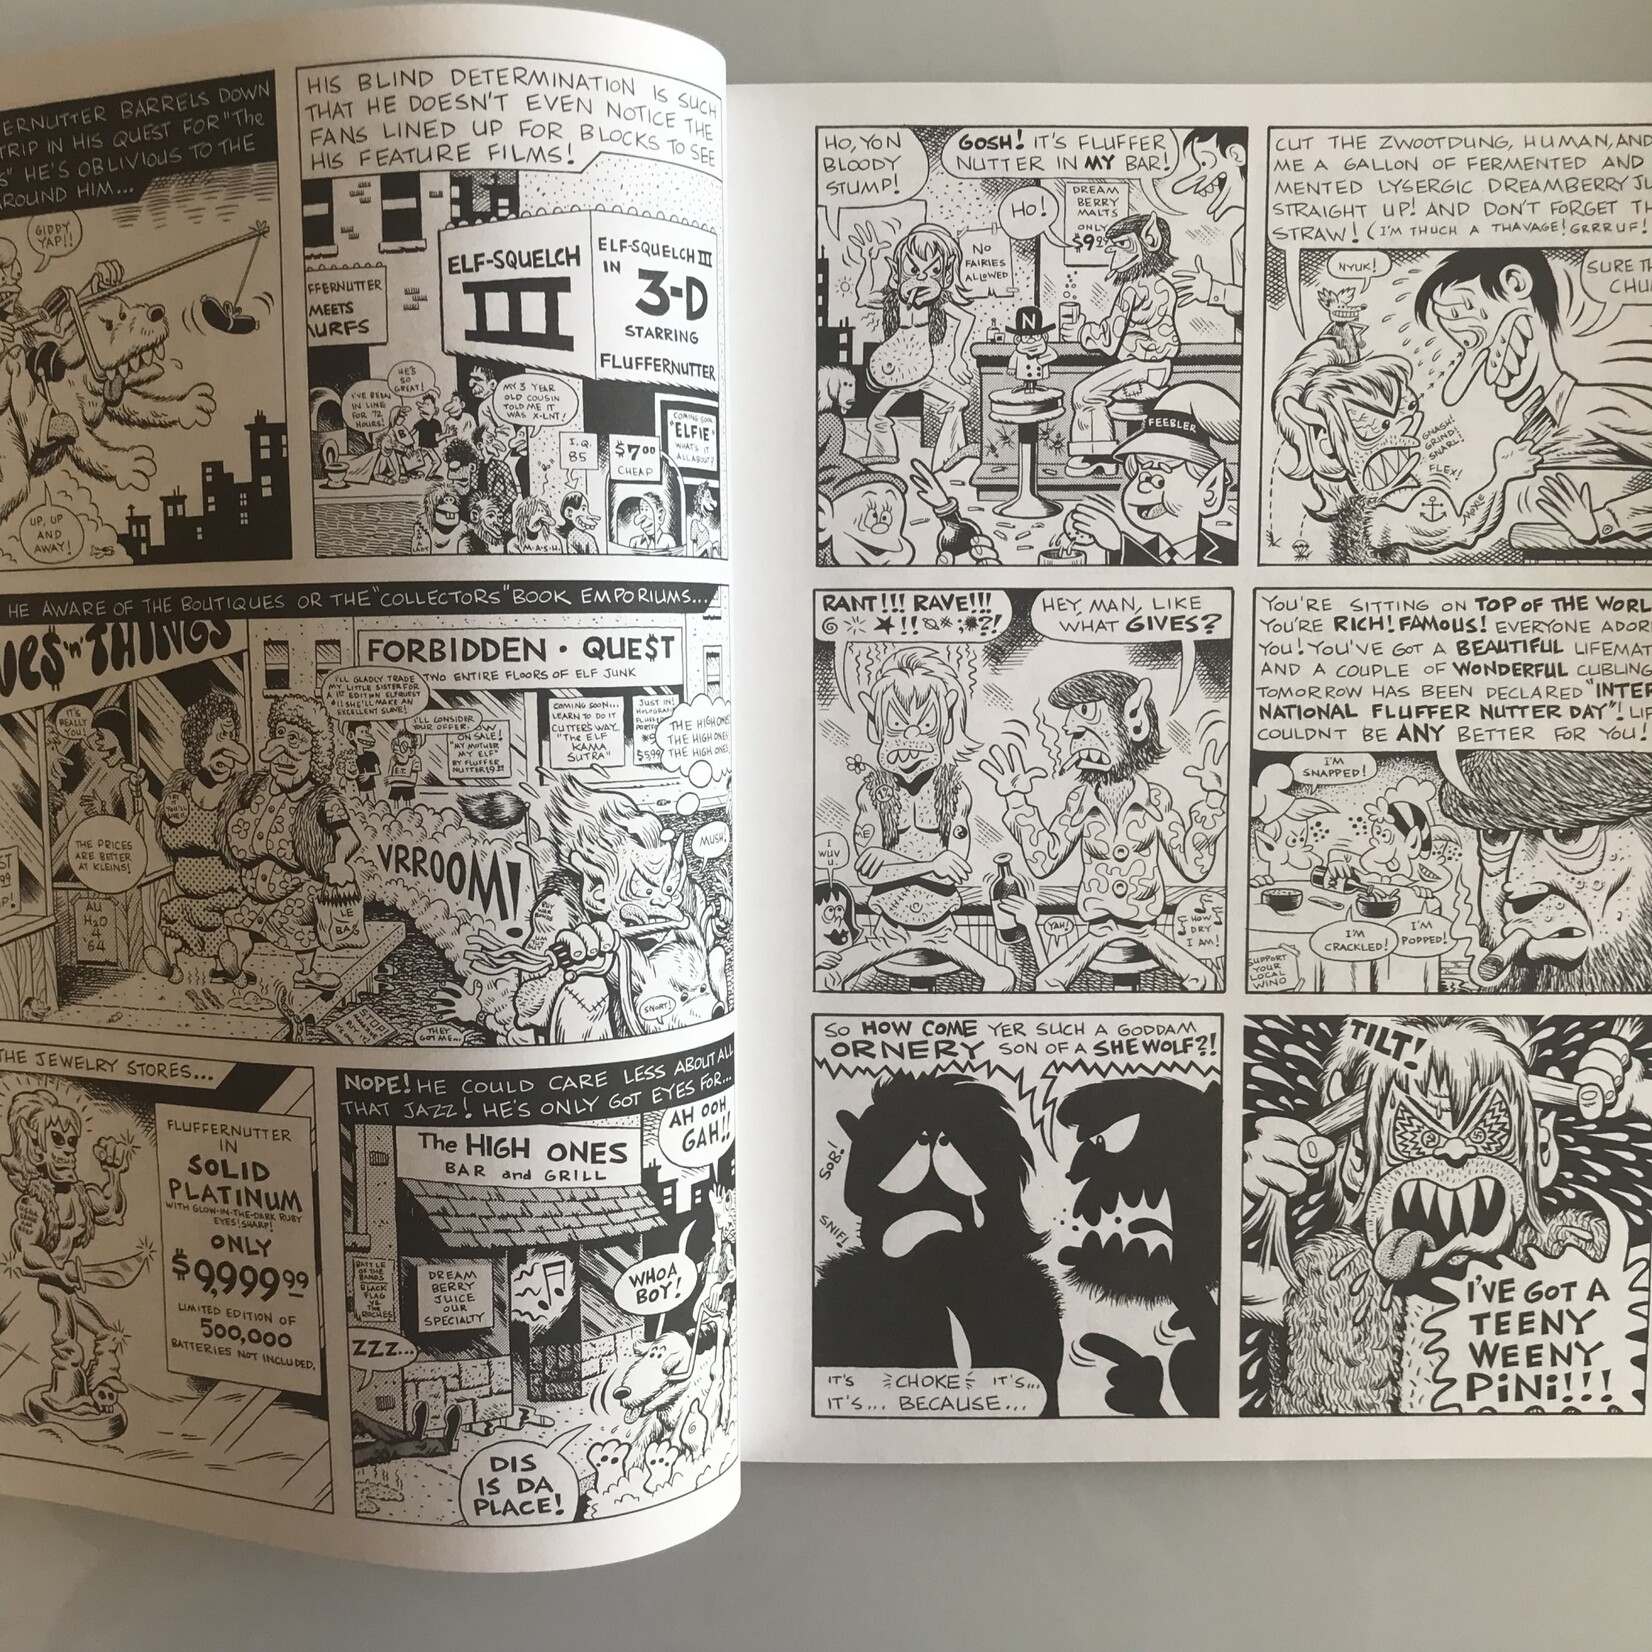 Weirdo - Vol. 1 #09 Winter 1984 (1993 Printing) - Comic Book